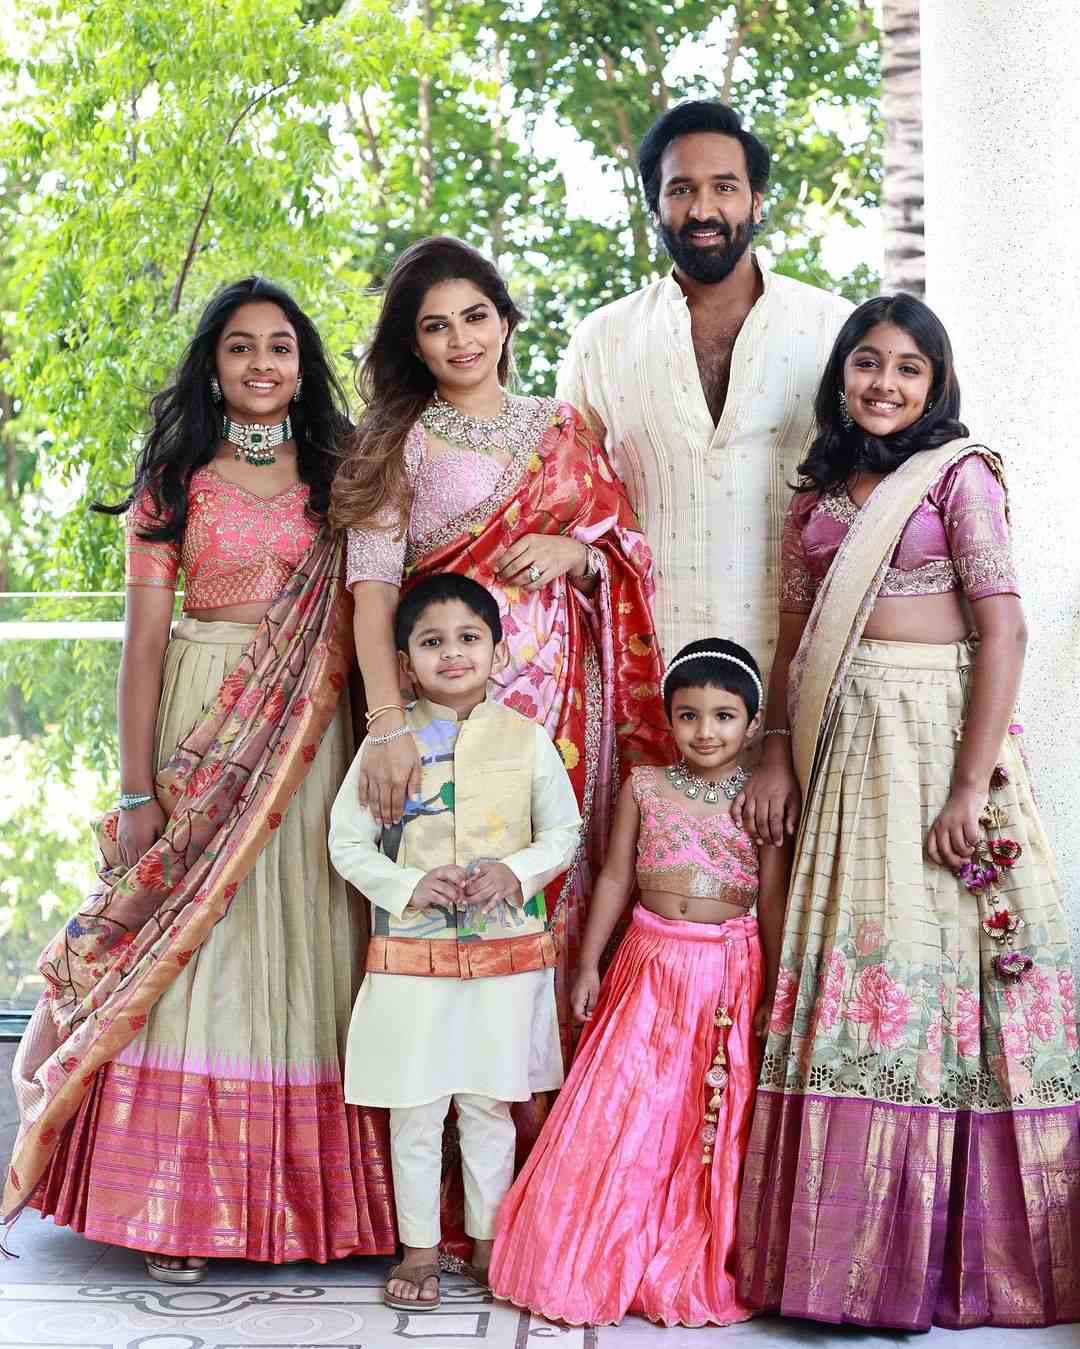 vishnu manchu and family for diwali'22 in label vida4